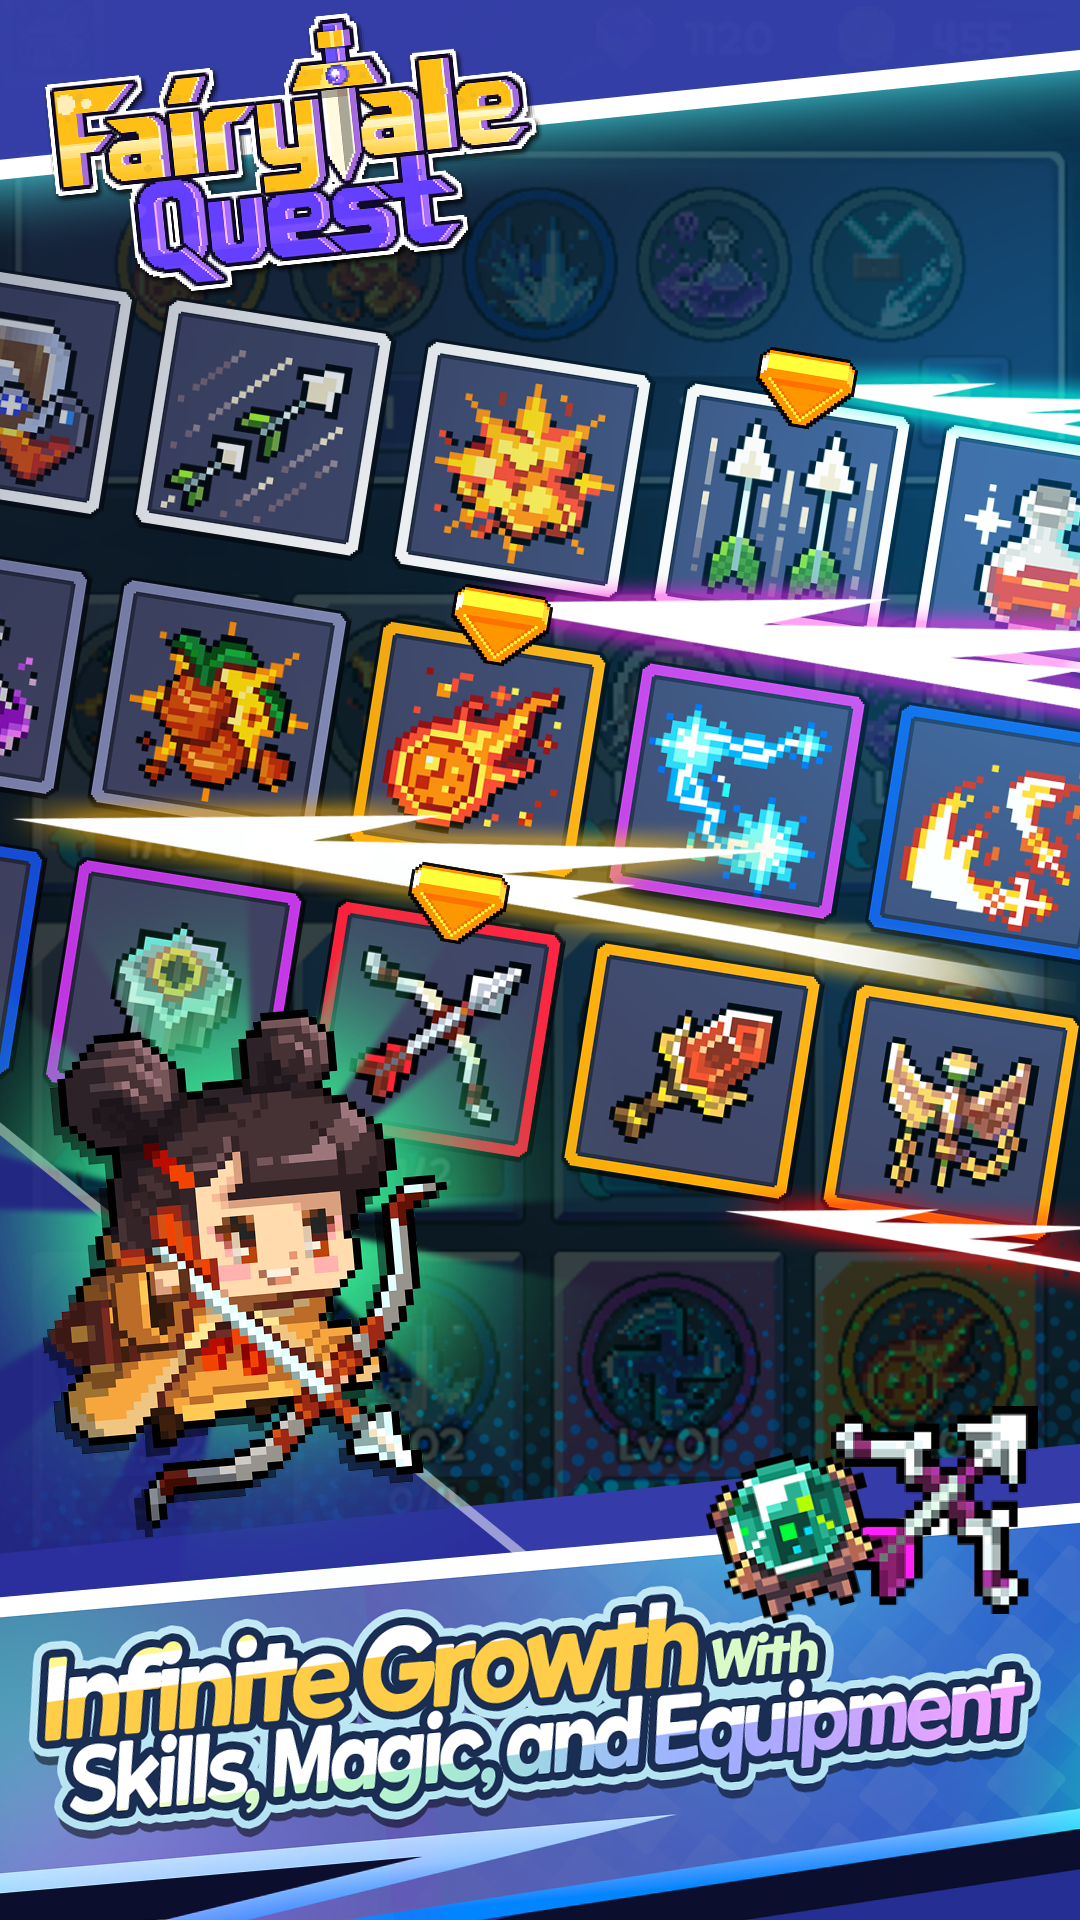 FairyTale Quest screenshot game